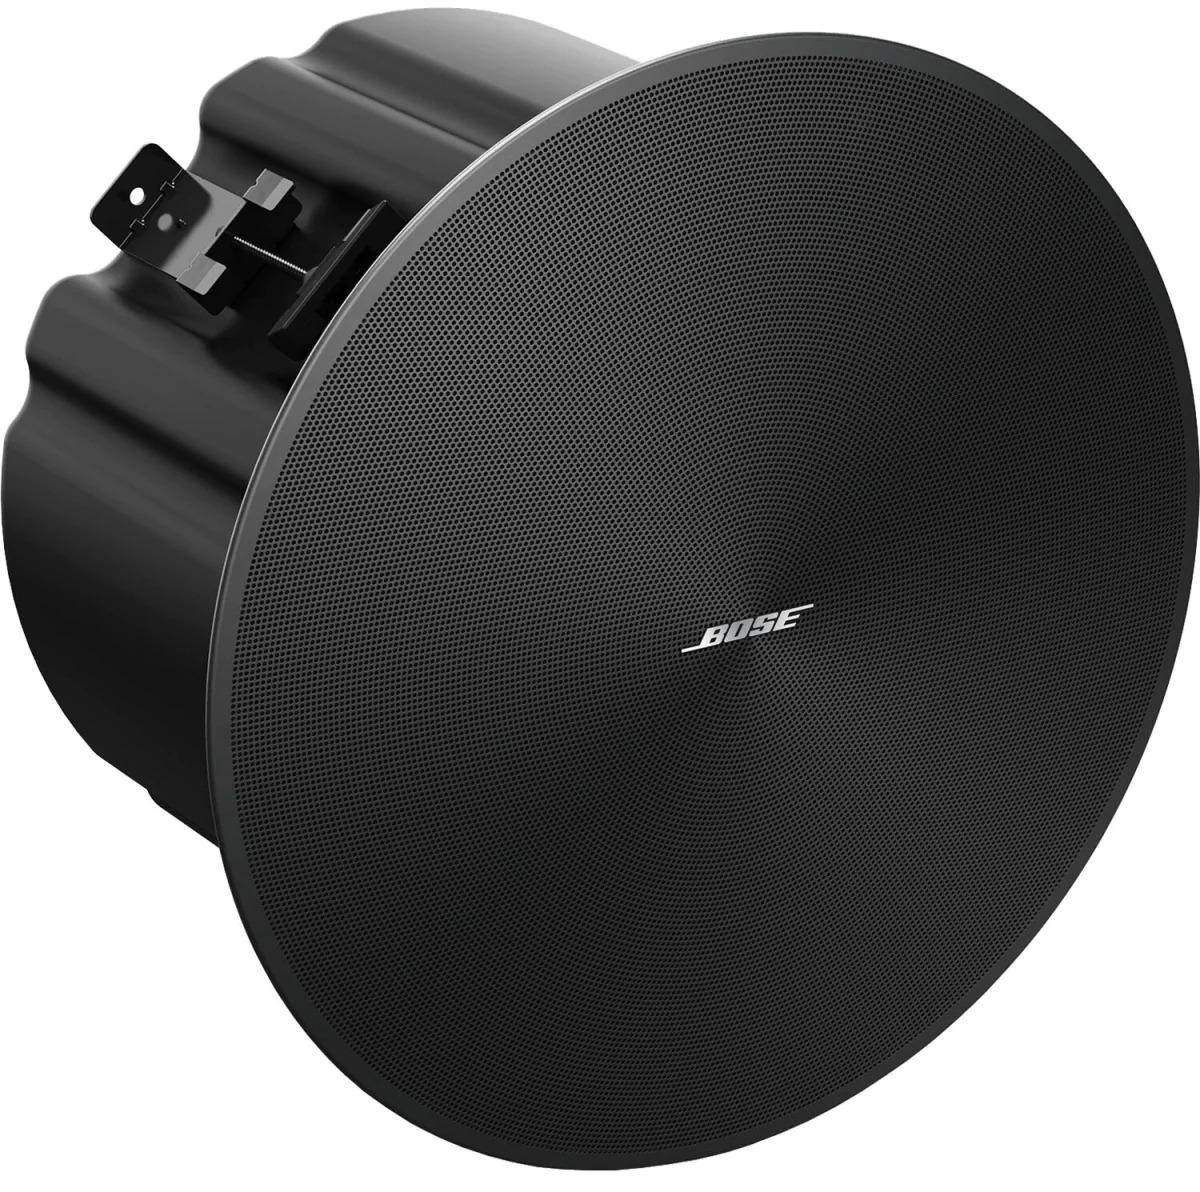 Bose Design Max DM8C 150W 8-inch Woofer In-Ceiling speaker zoom image